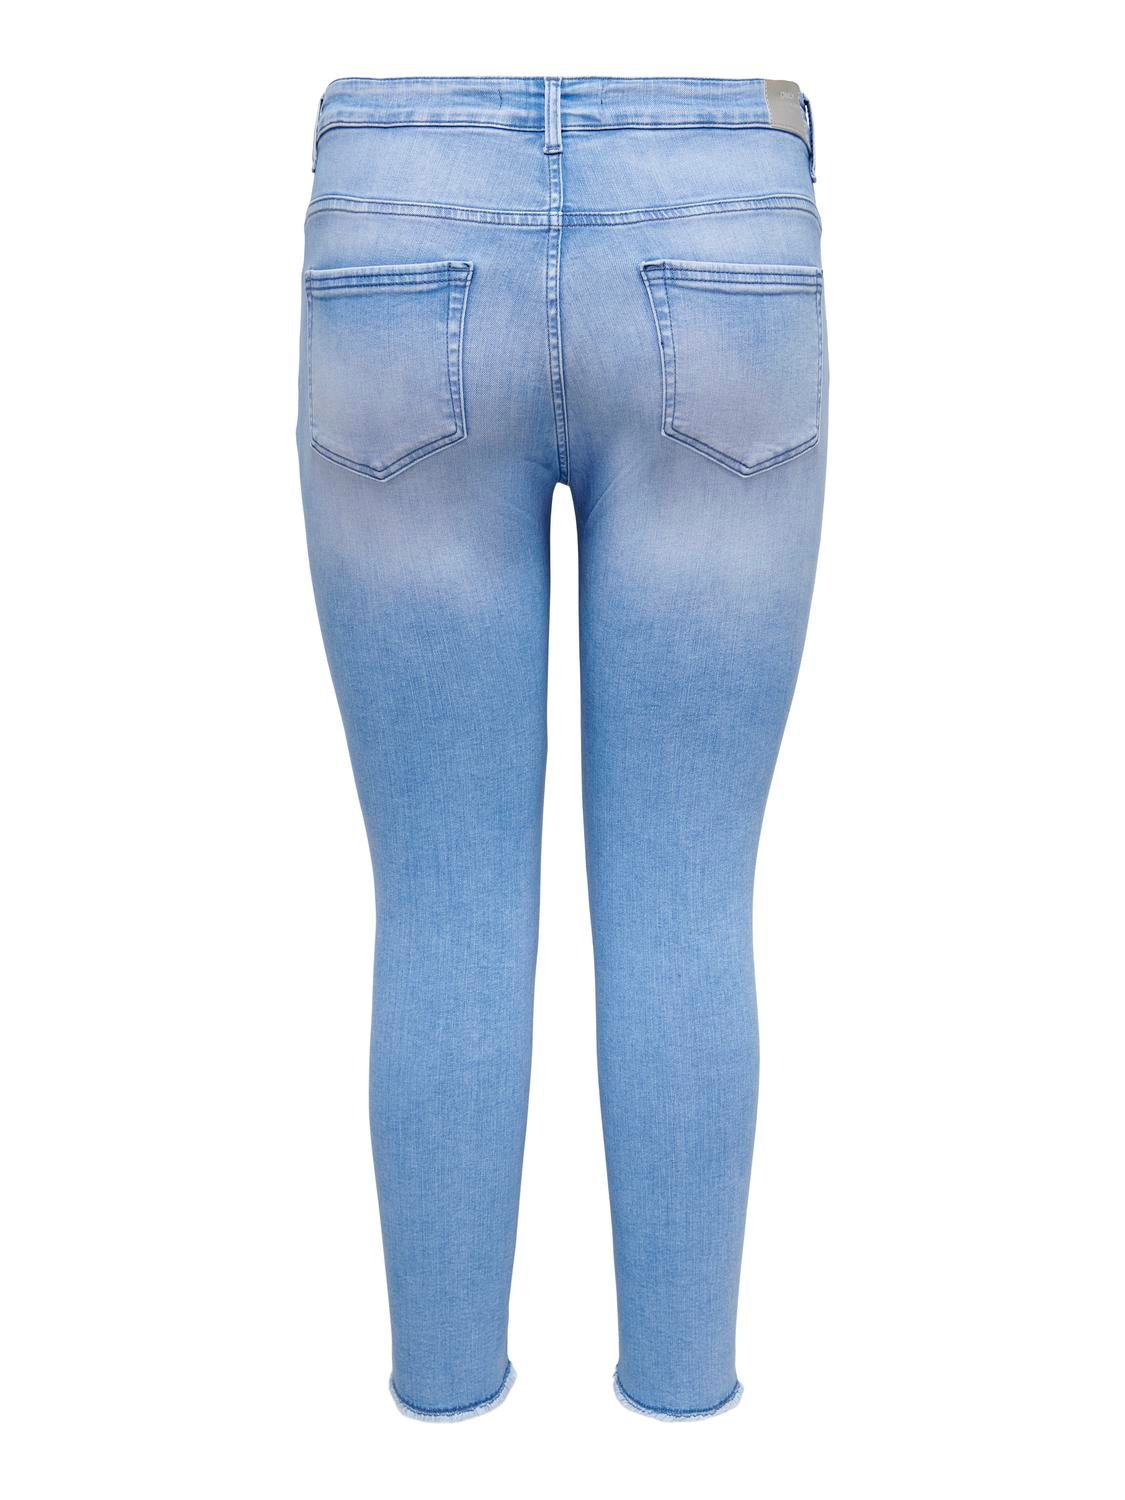 ONLY CARWilly Regular Waist Skinny Jeans -Light Blue Denim - 15321548